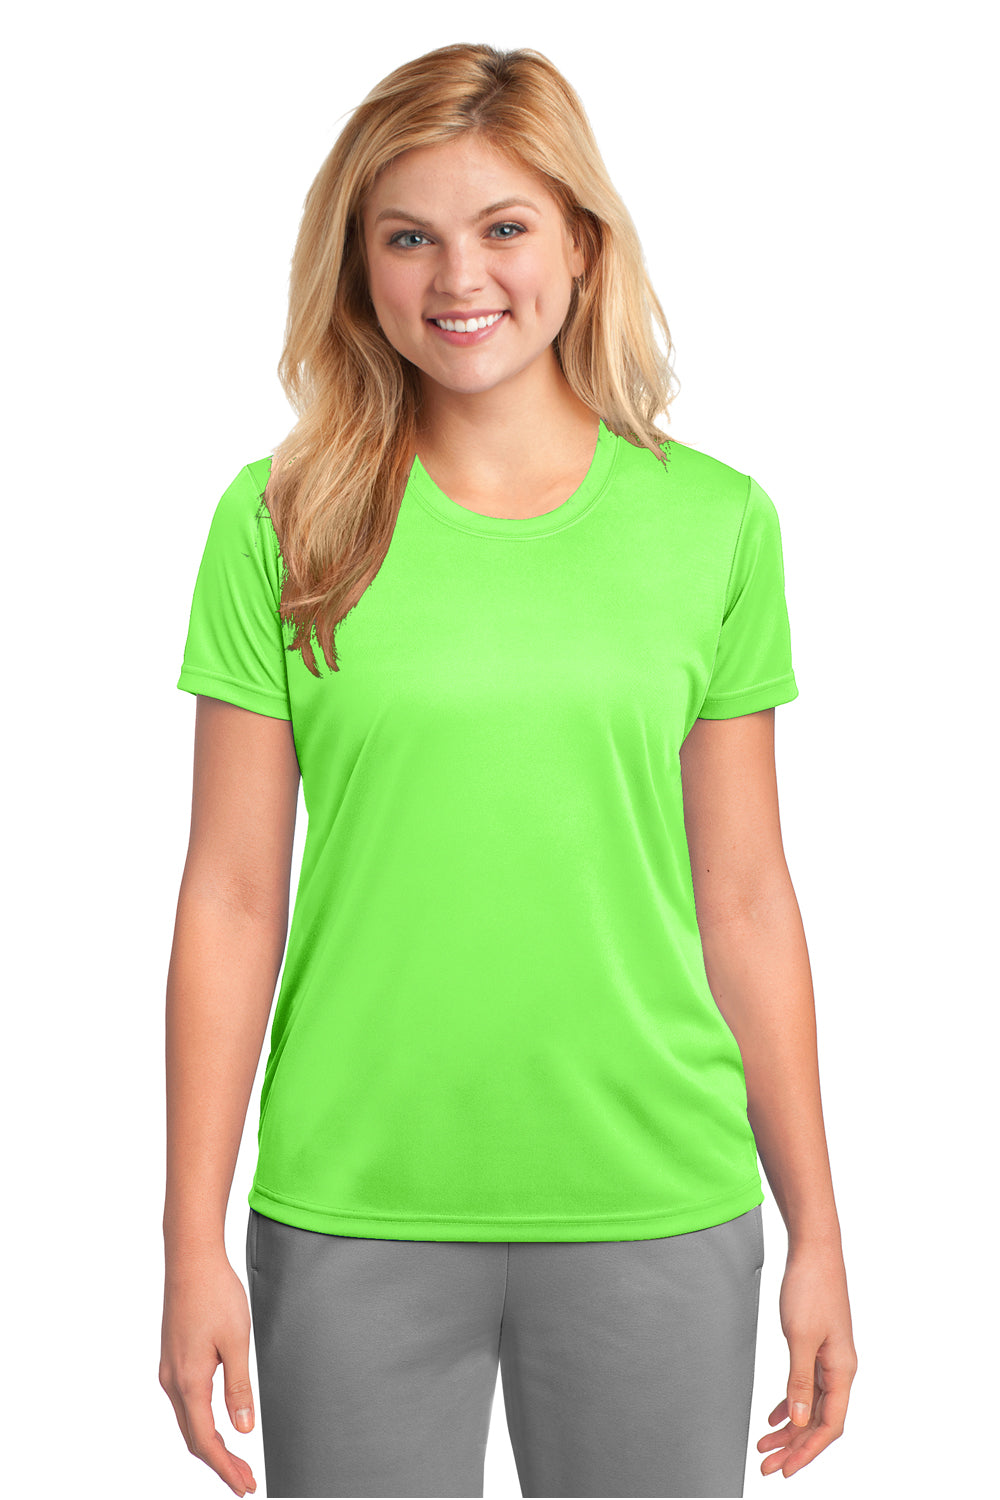 Port & Company LPC380 Womens Dry Zone Performance Moisture Wicking Short Sleeve Crewneck T-Shirt Neon Green Front